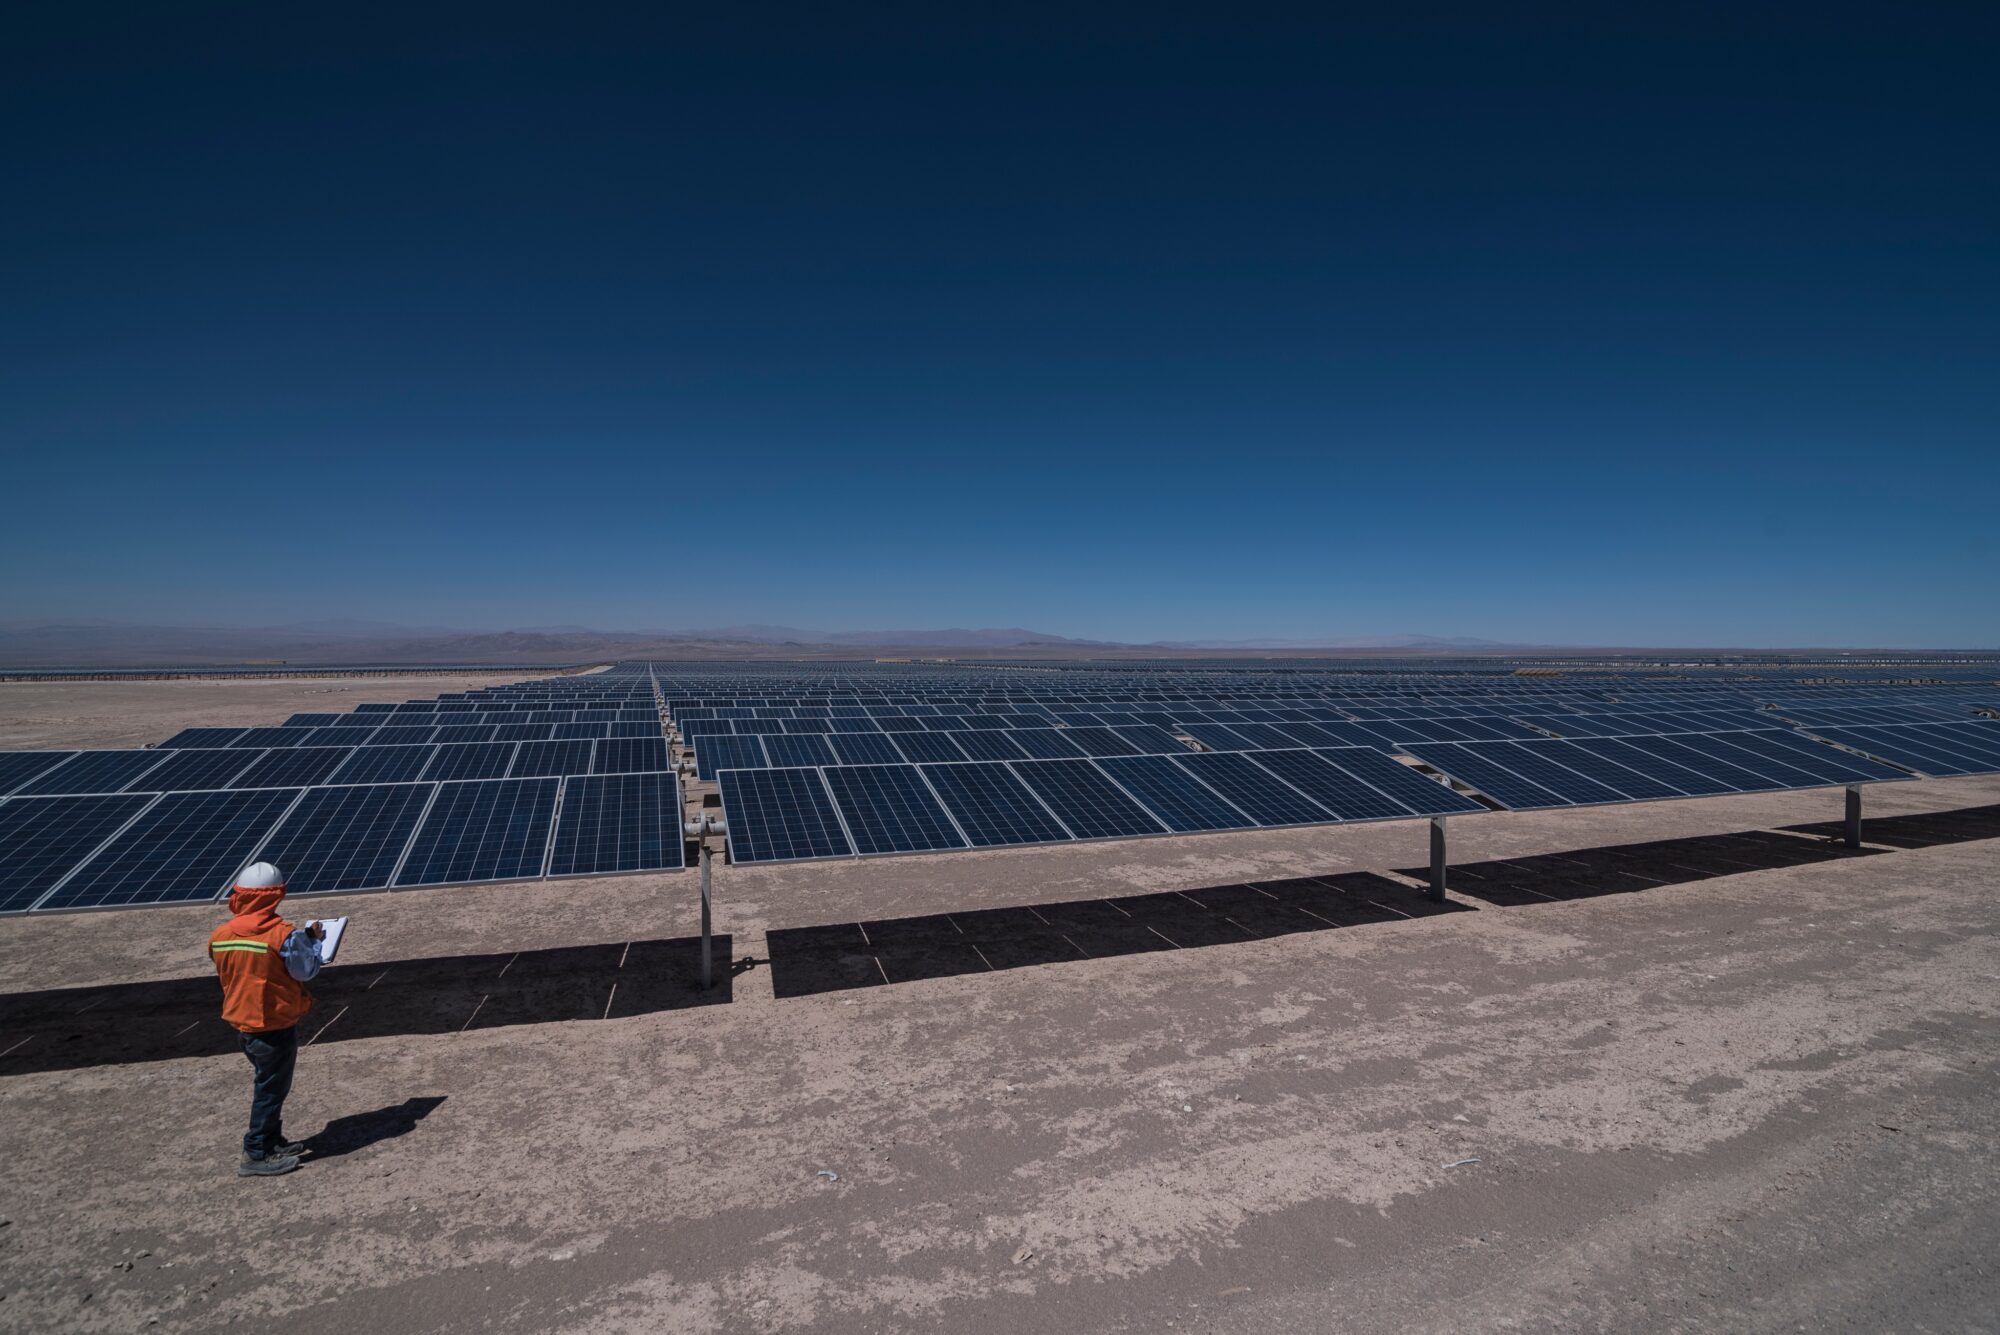 A solar park in Chile's Atacama desert